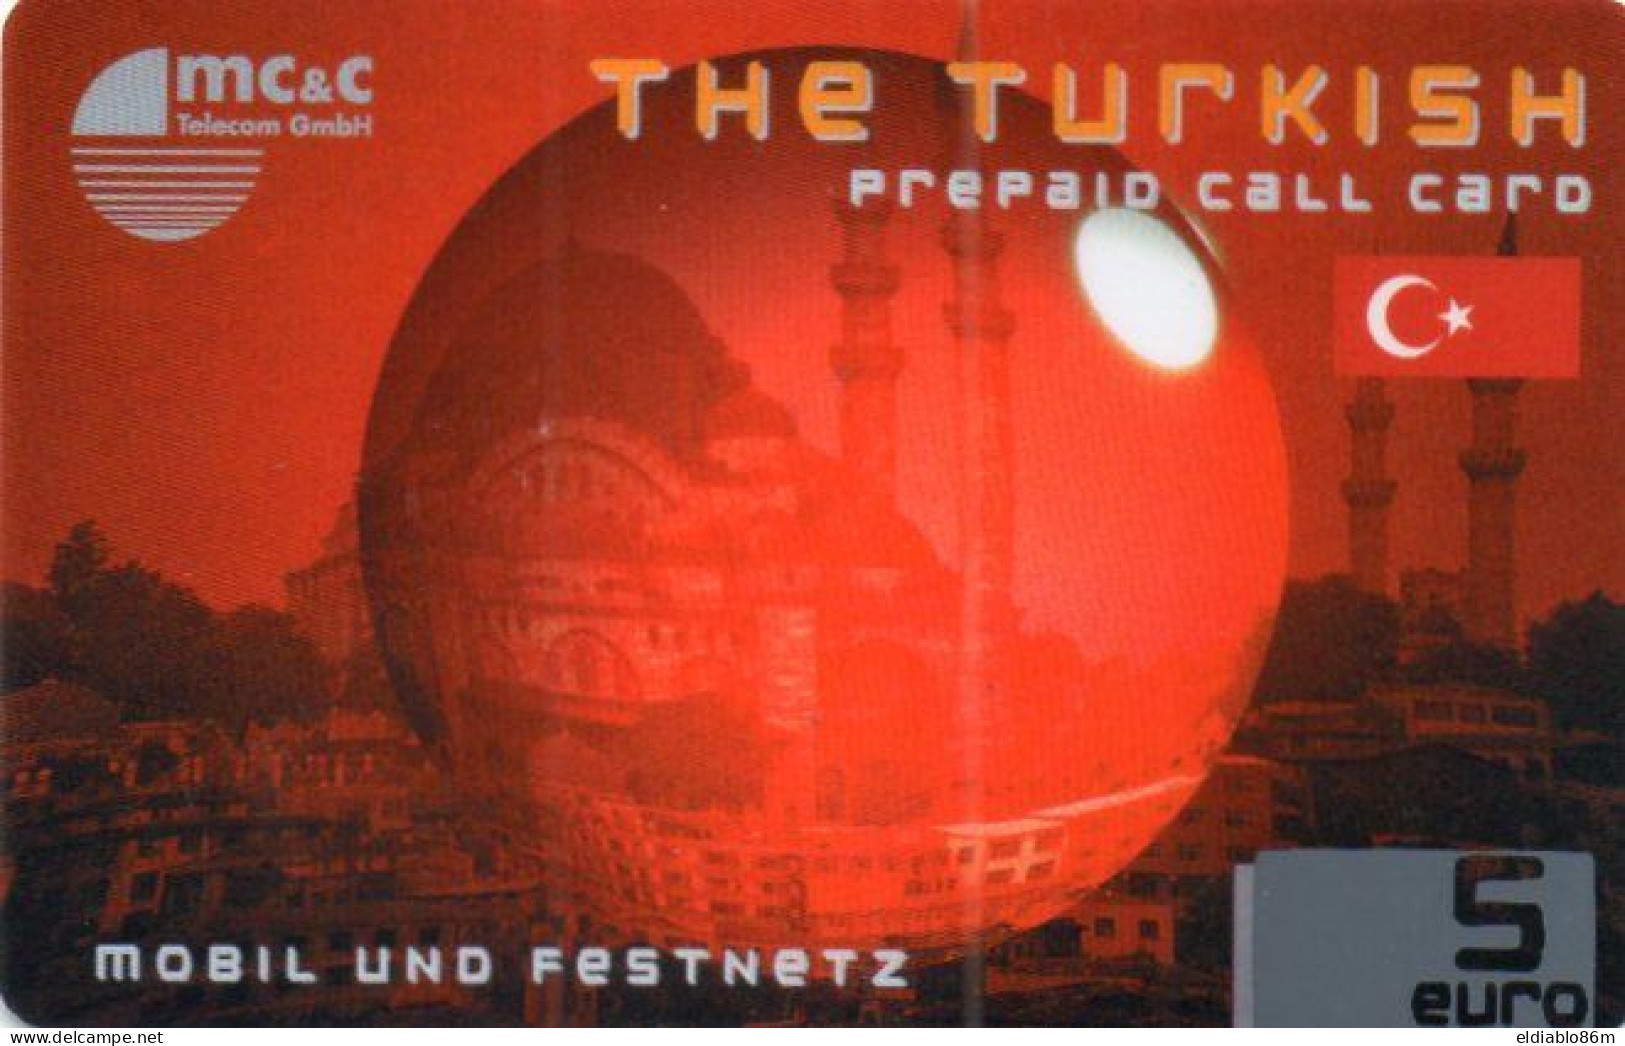 GERMANY - PREPAID - MC & C TELECOM GmbH - THE TURKISH - MOSQUE - TURKEY RELATED - MINT - Cellulari, Carte Prepagate E Ricariche